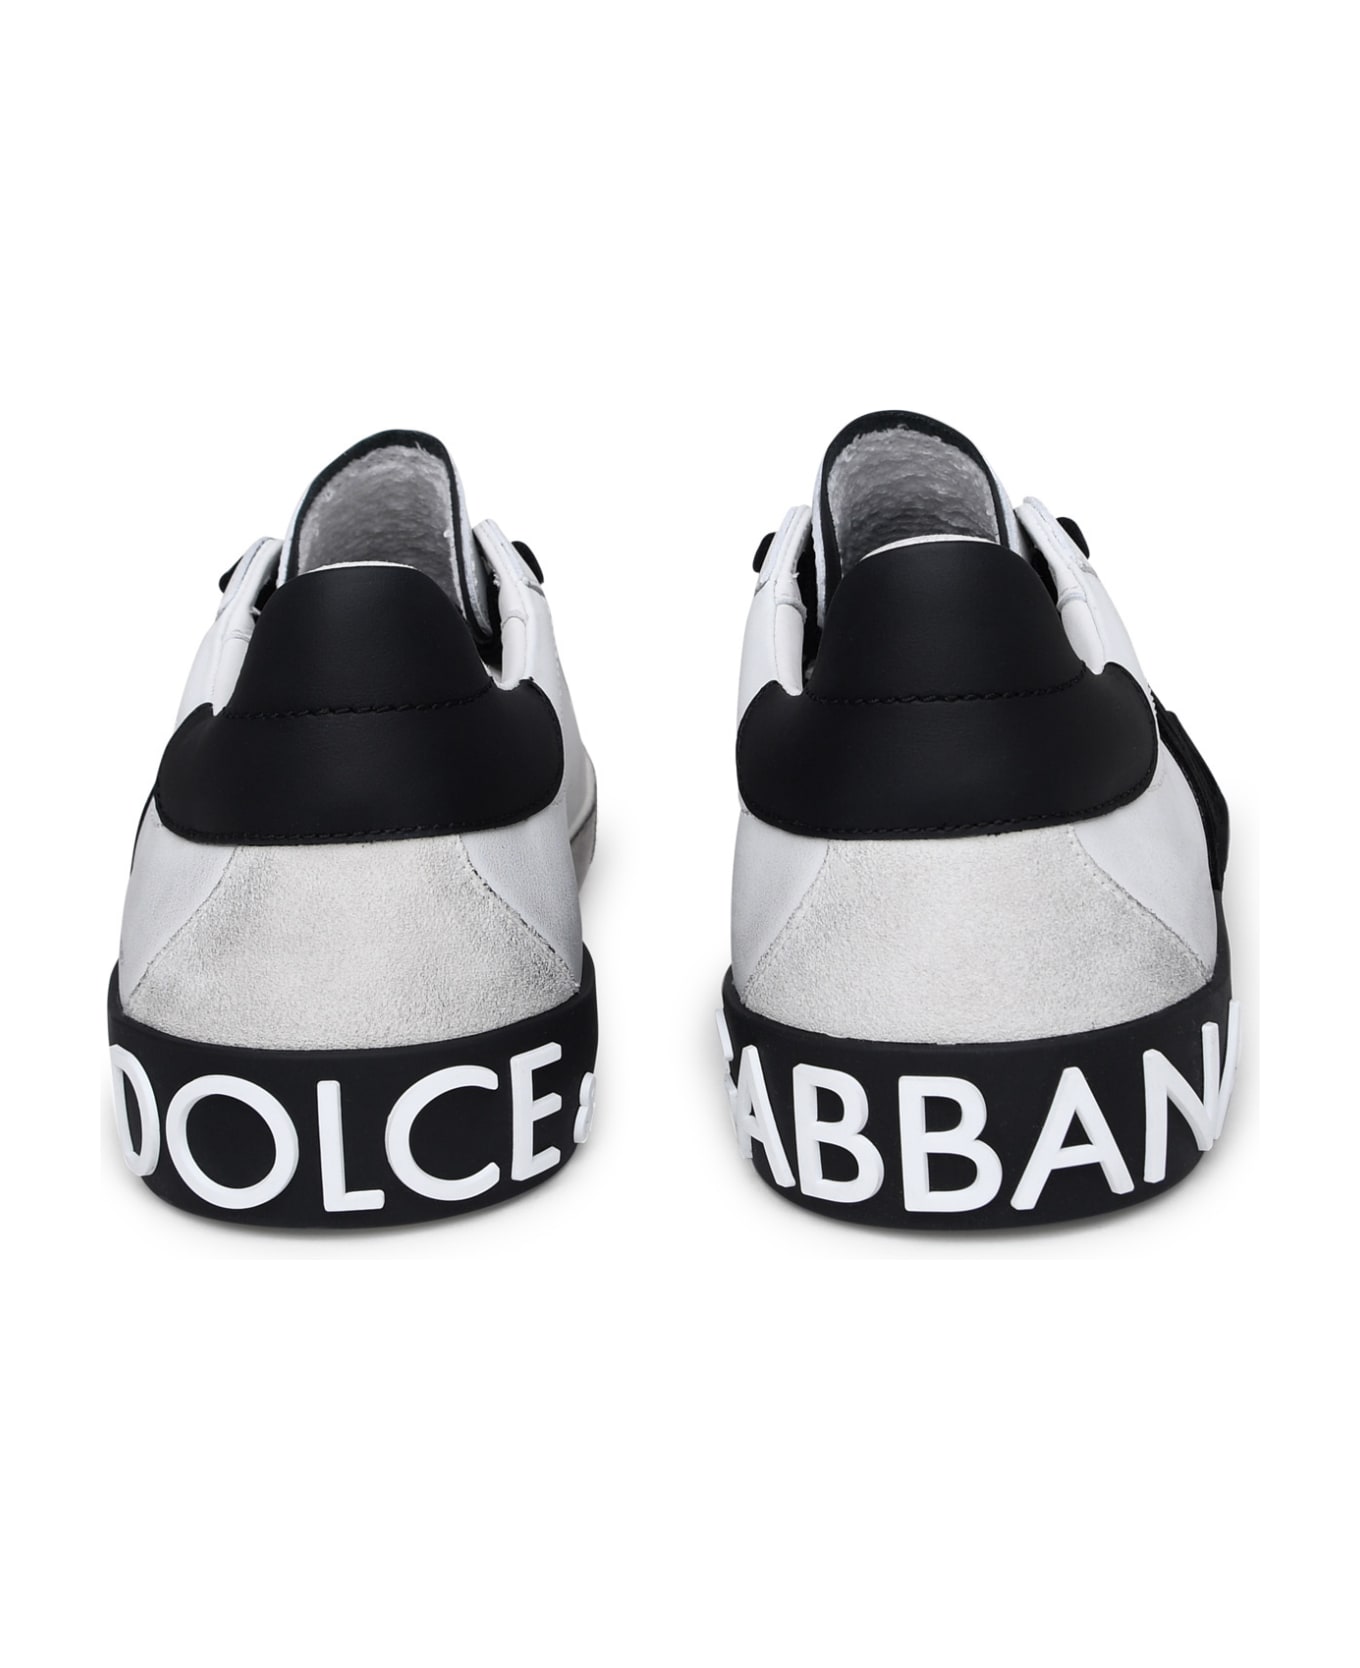 Dolce & Gabbana Leather Sneakers - BIANCO/NERO